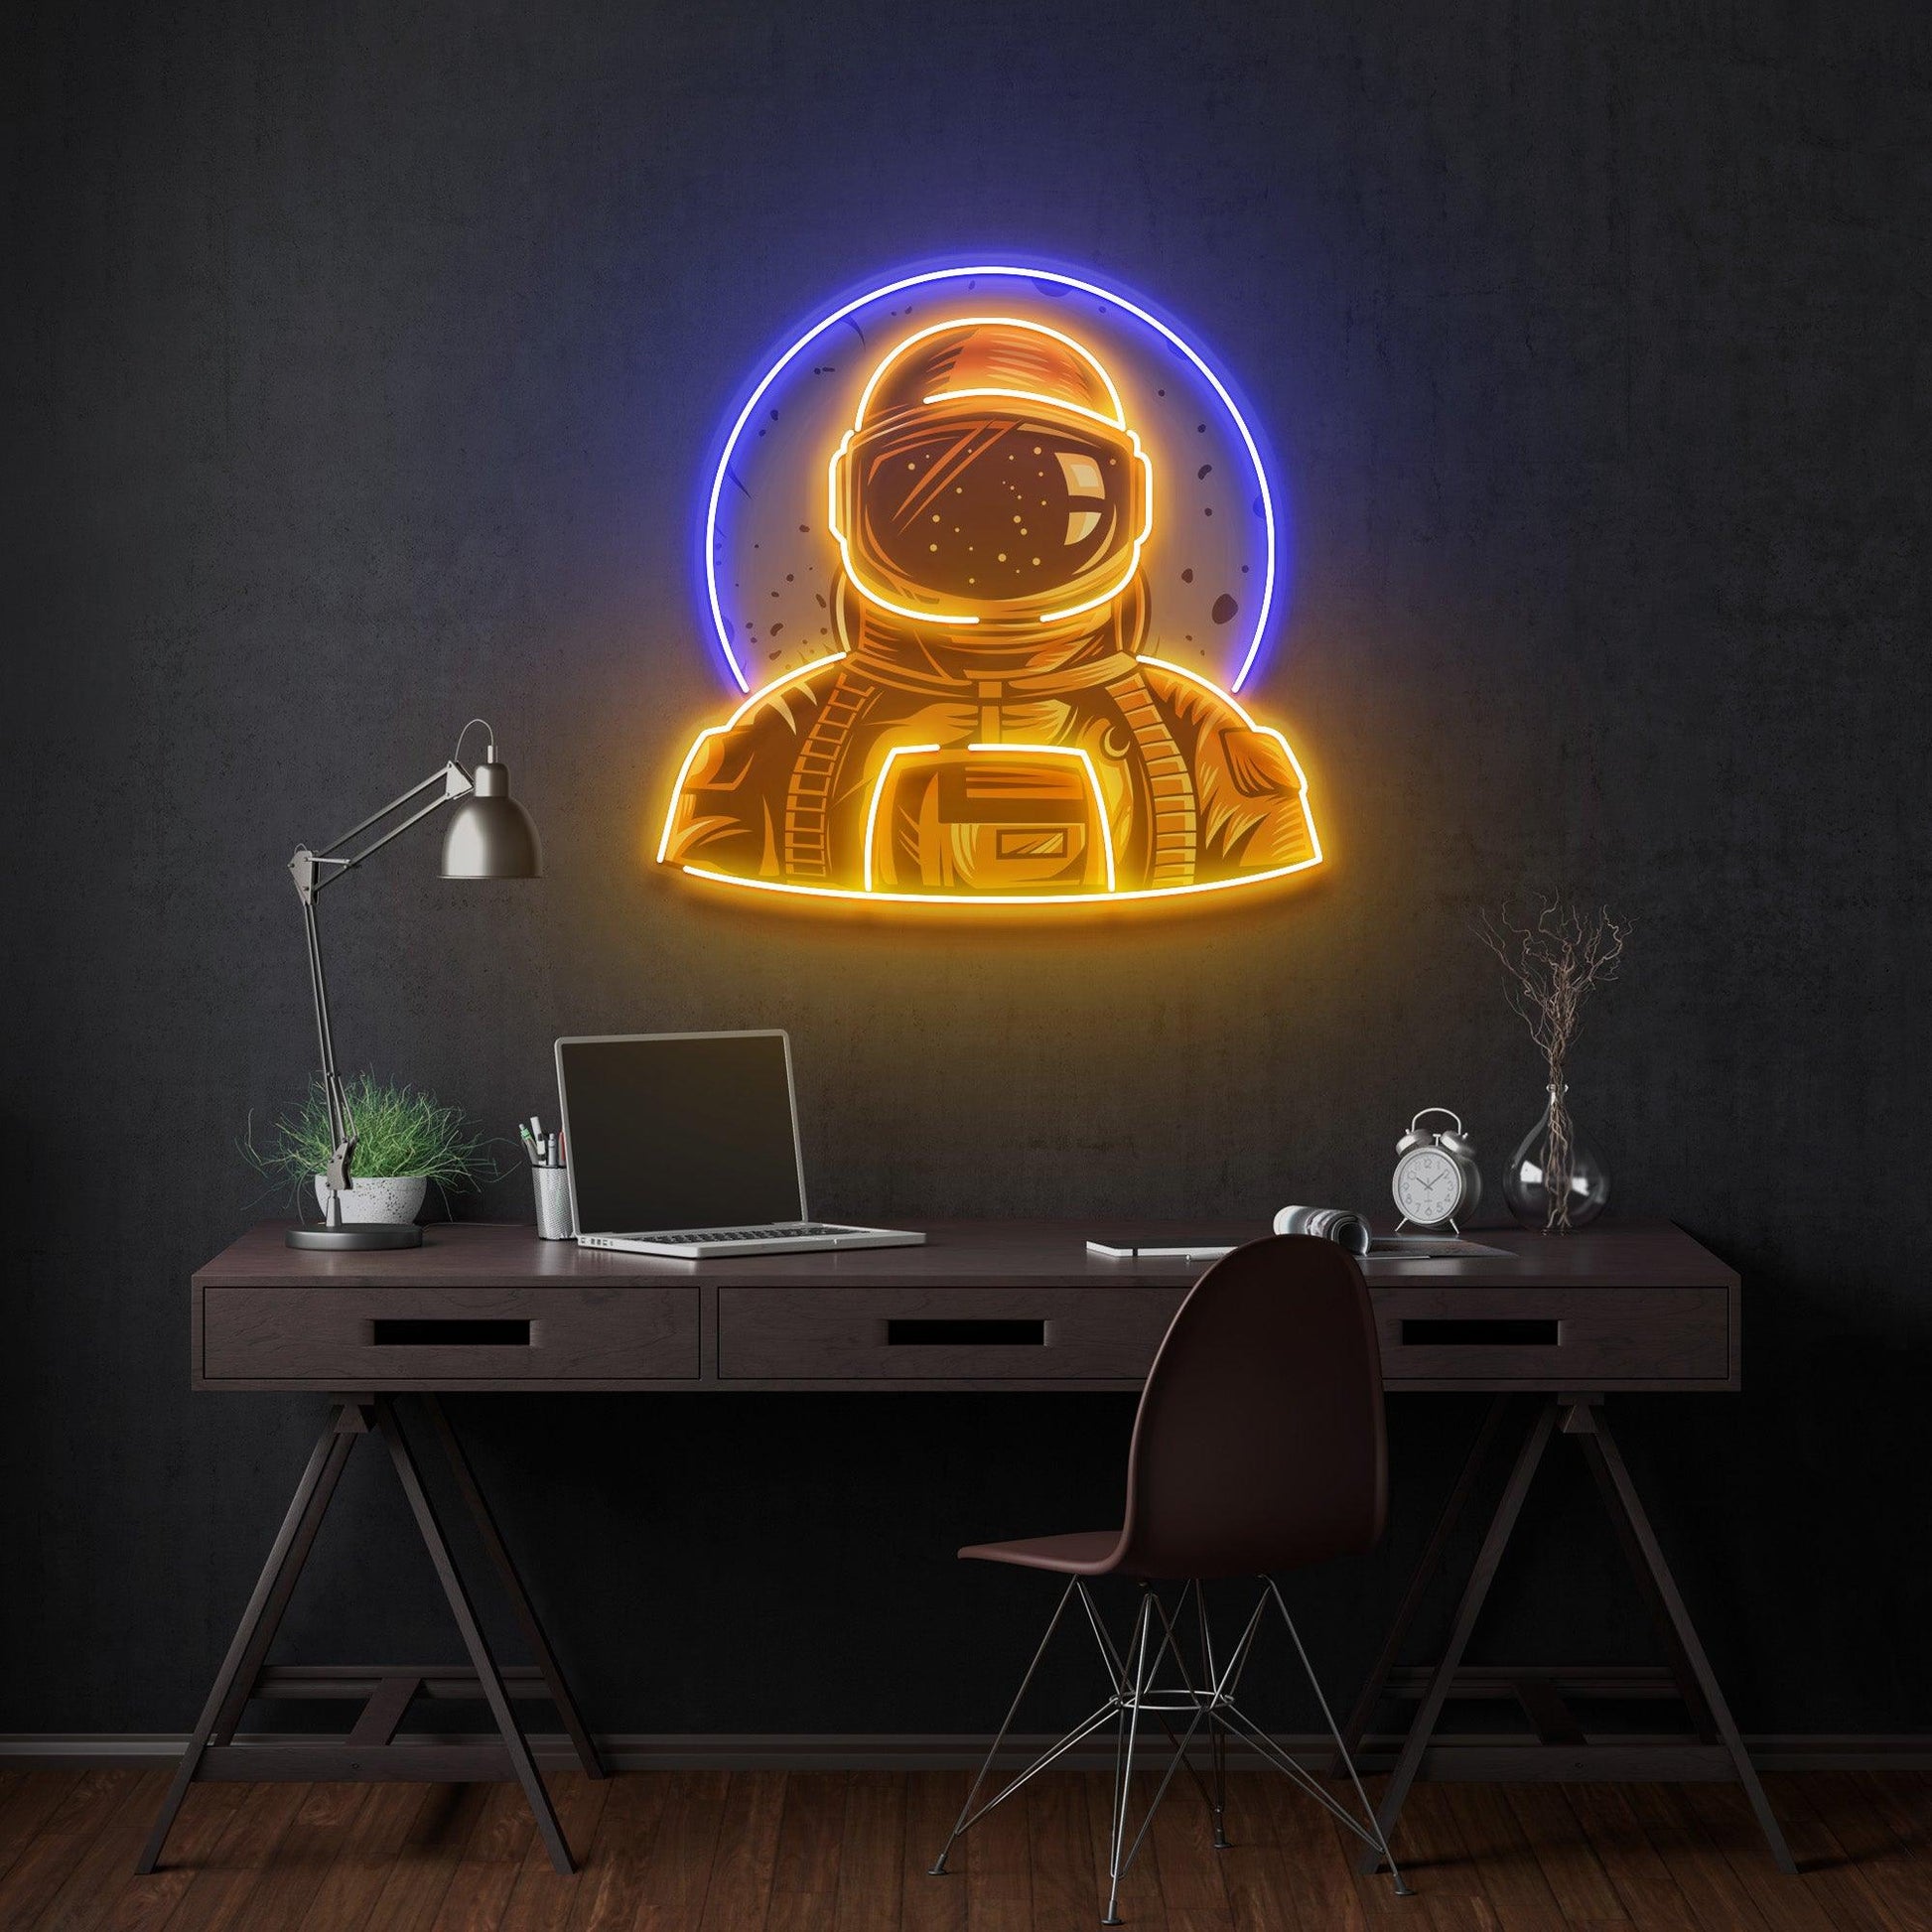 Astronaut Emblem Led Neon Acrylic Artwork - Neonzastudio